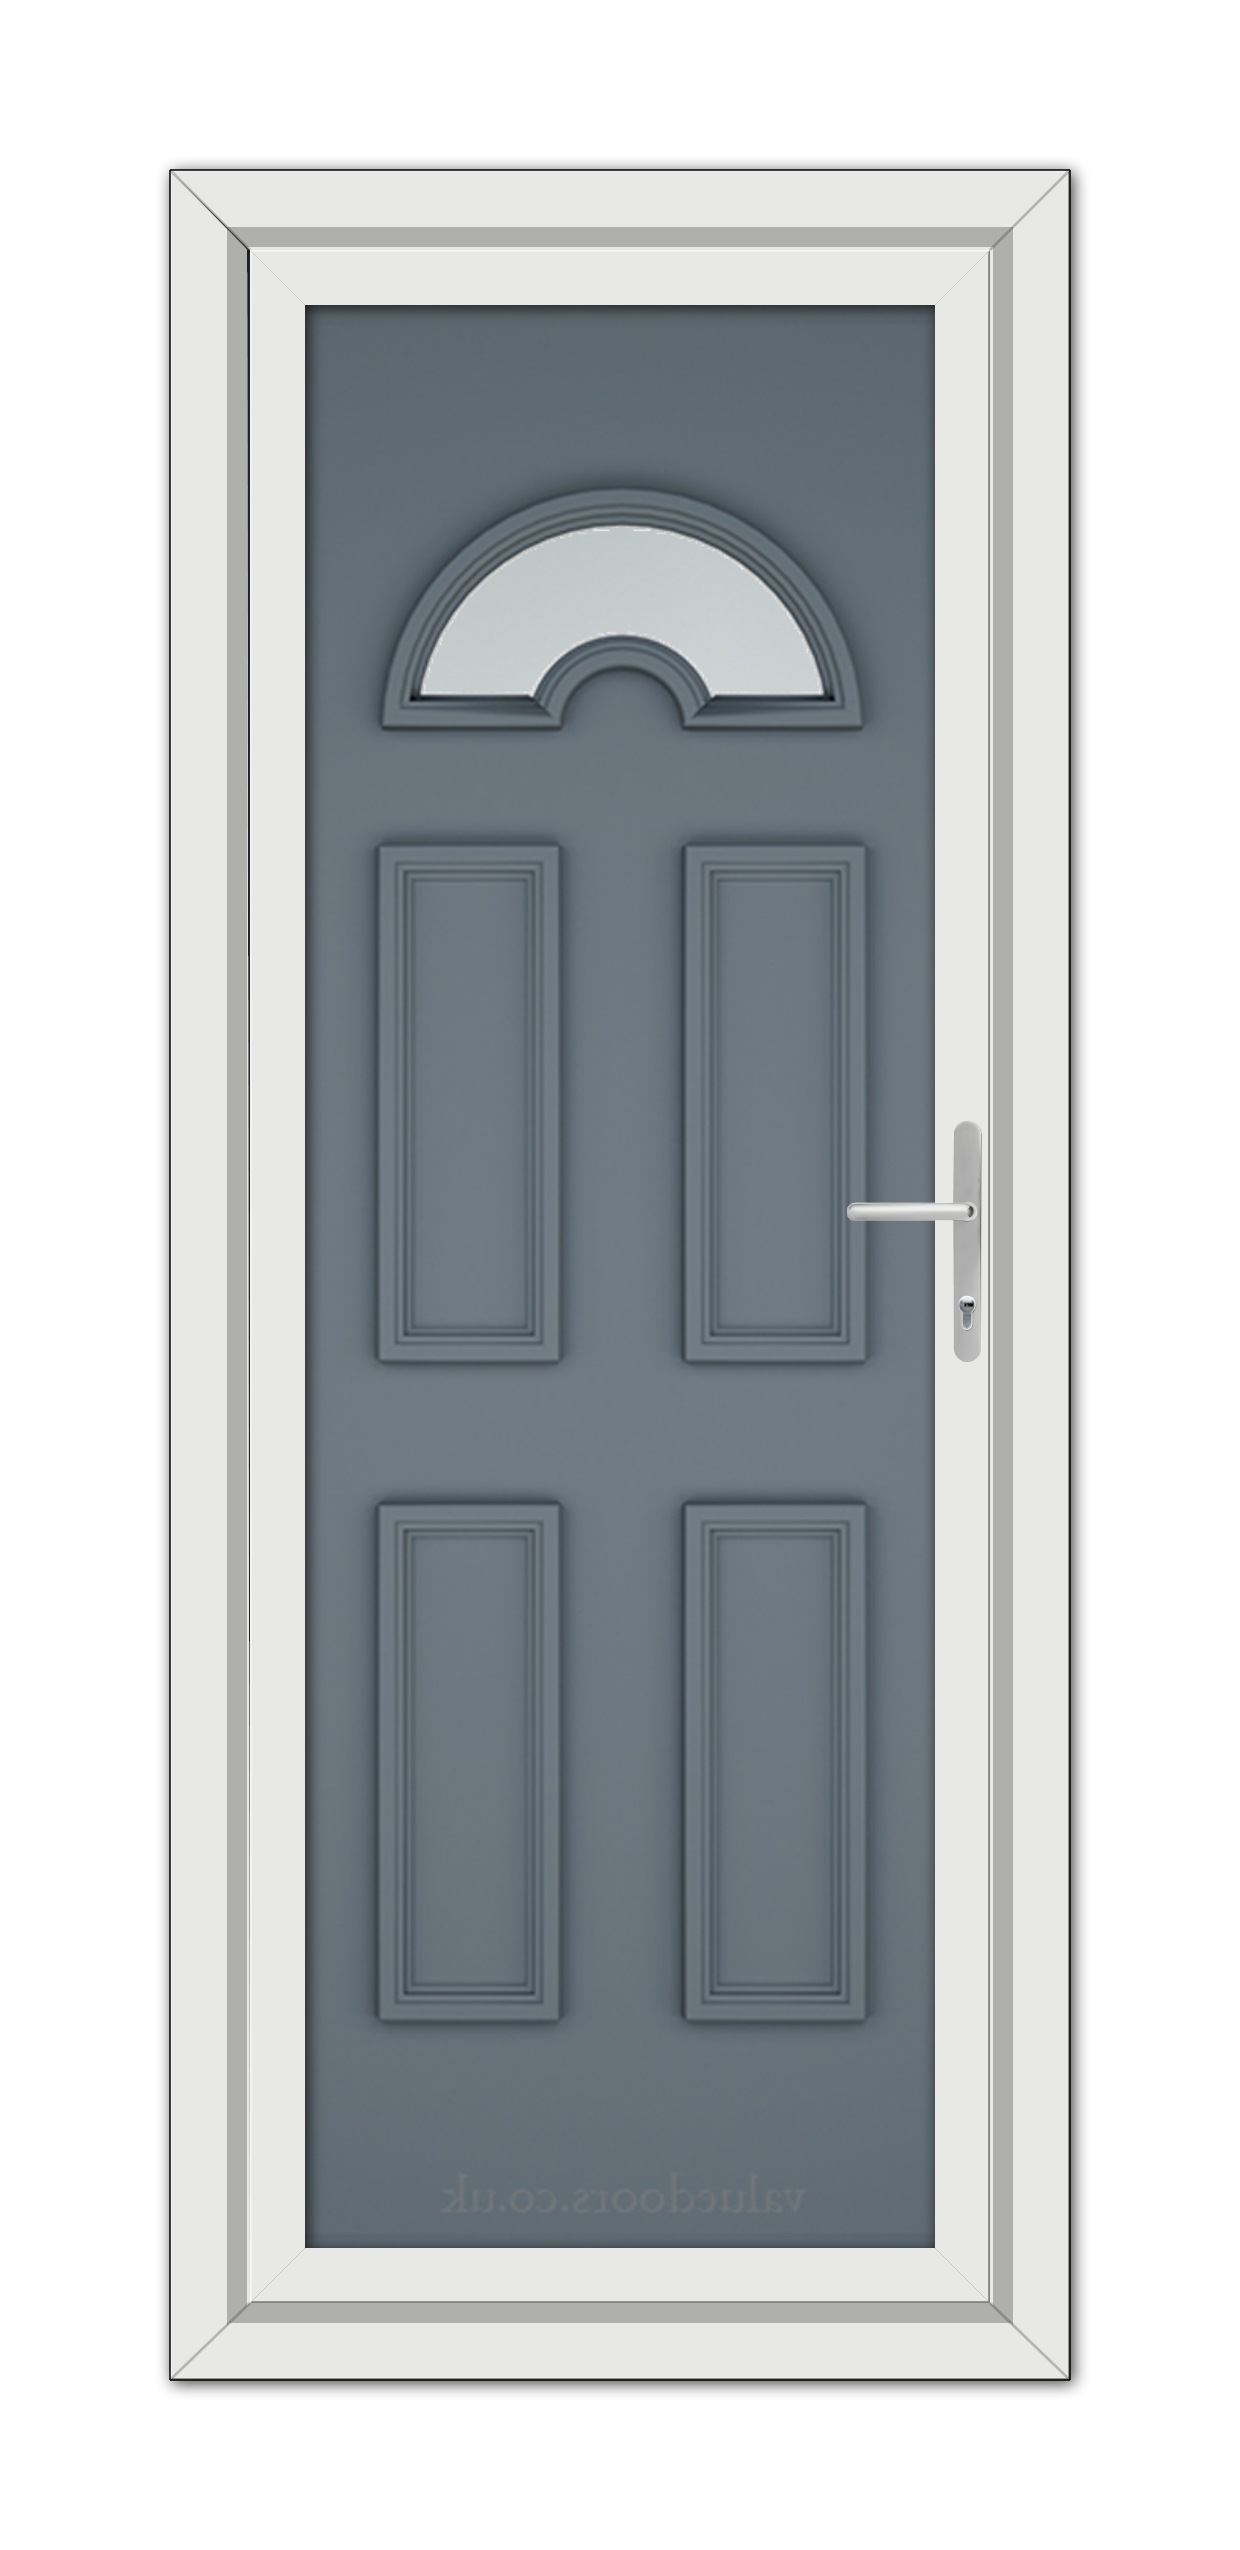 A Slate Grey Sandringham uPVC Door with a white frame.